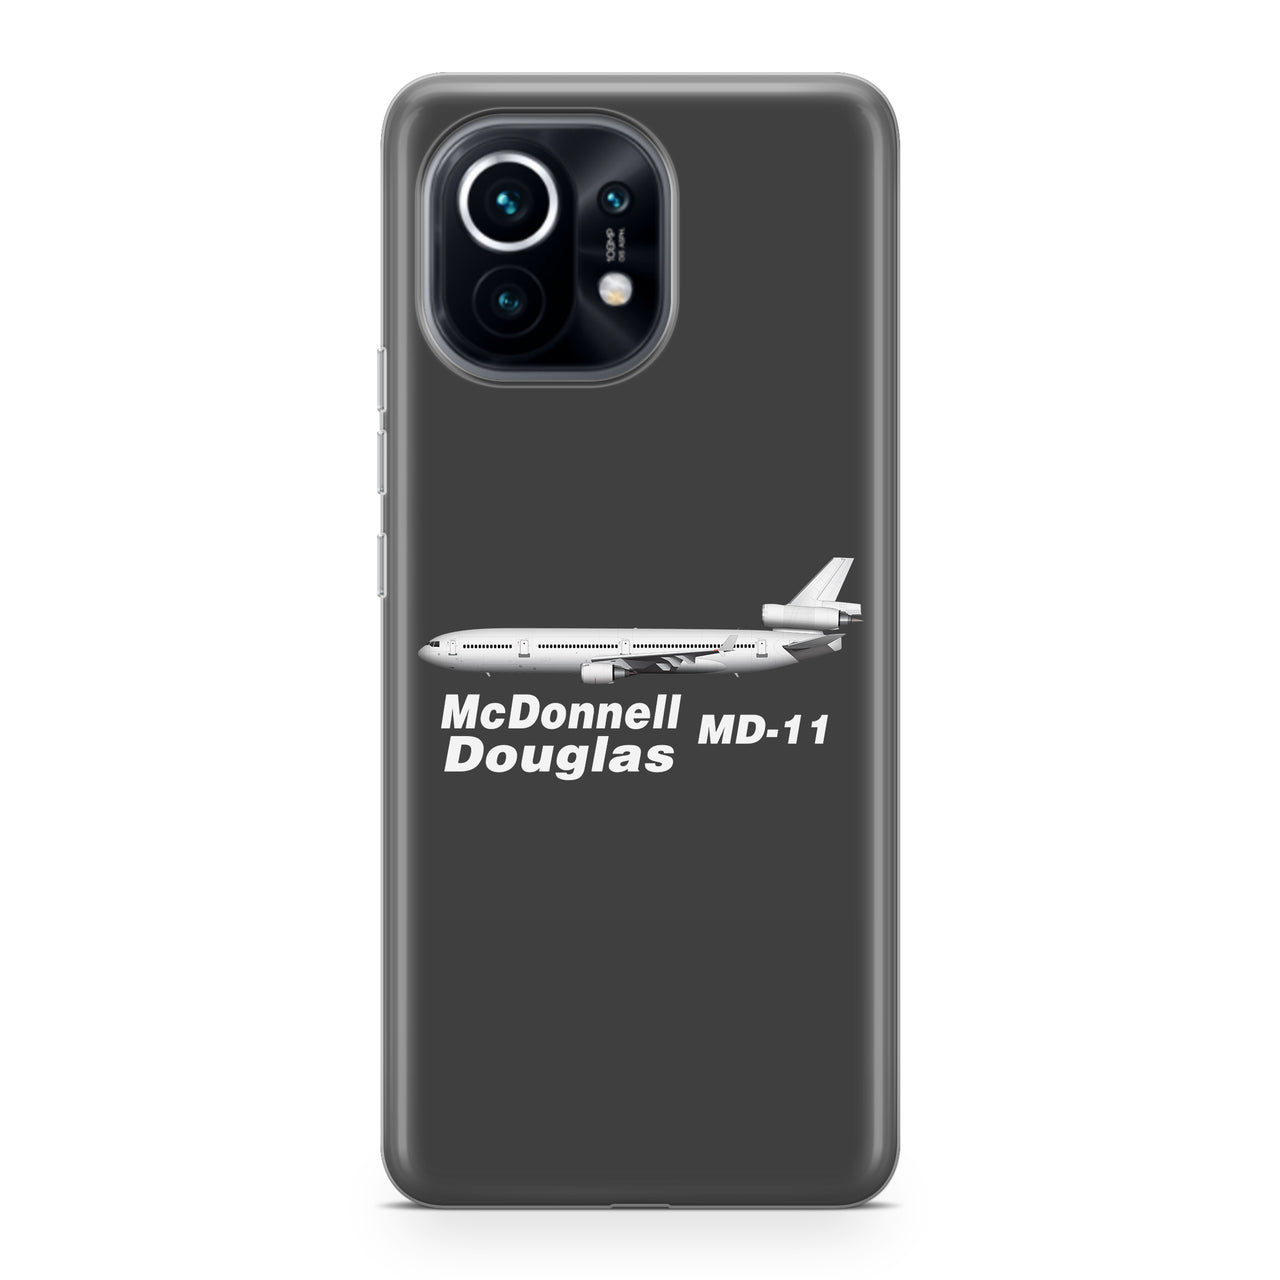 The McDonnell Douglas MD-11 Designed Xiaomi Cases